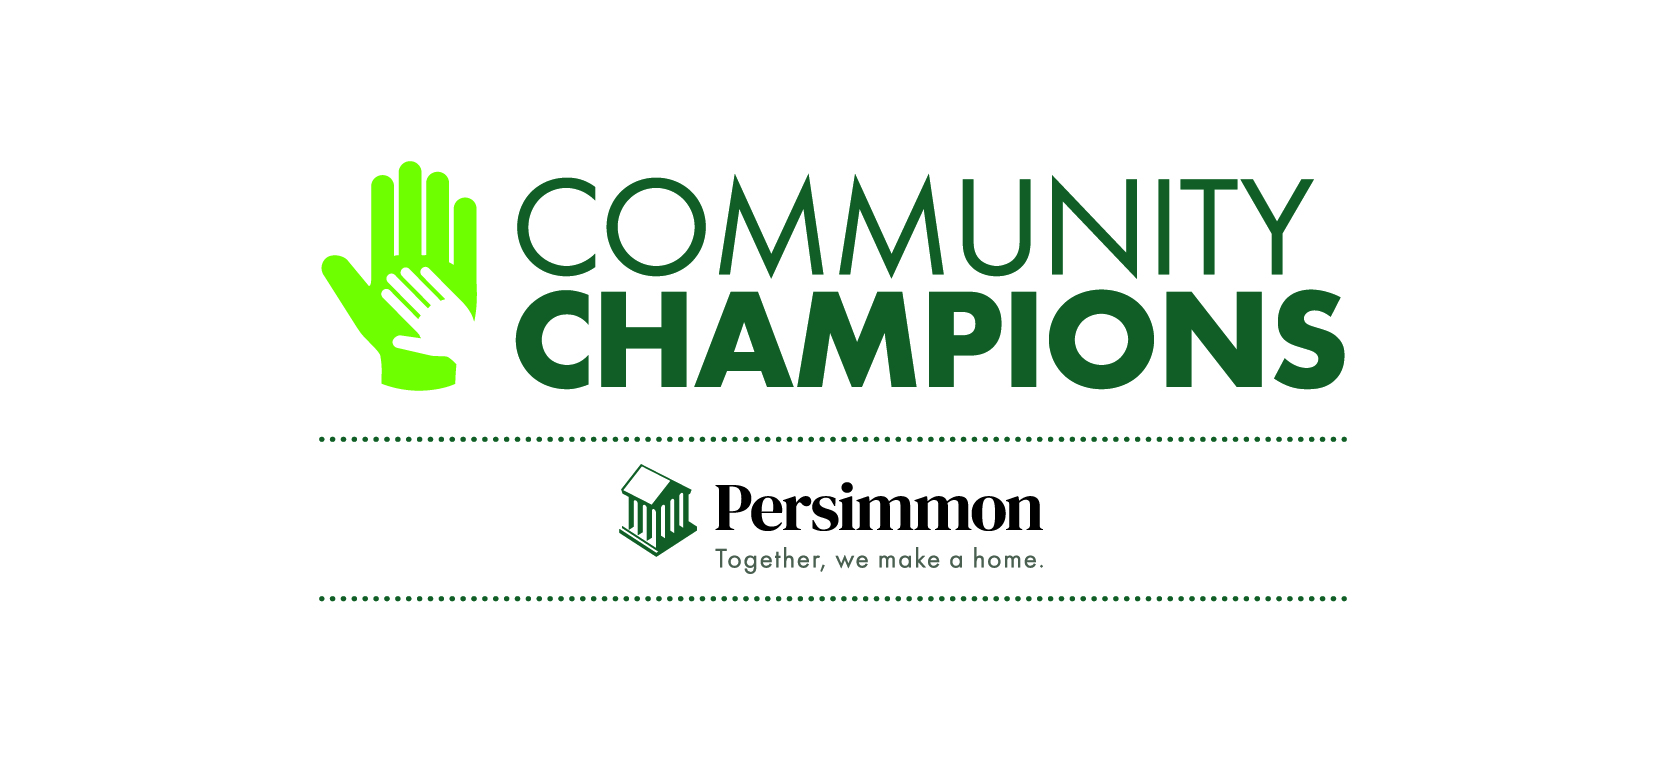 Persimmon Community Champions